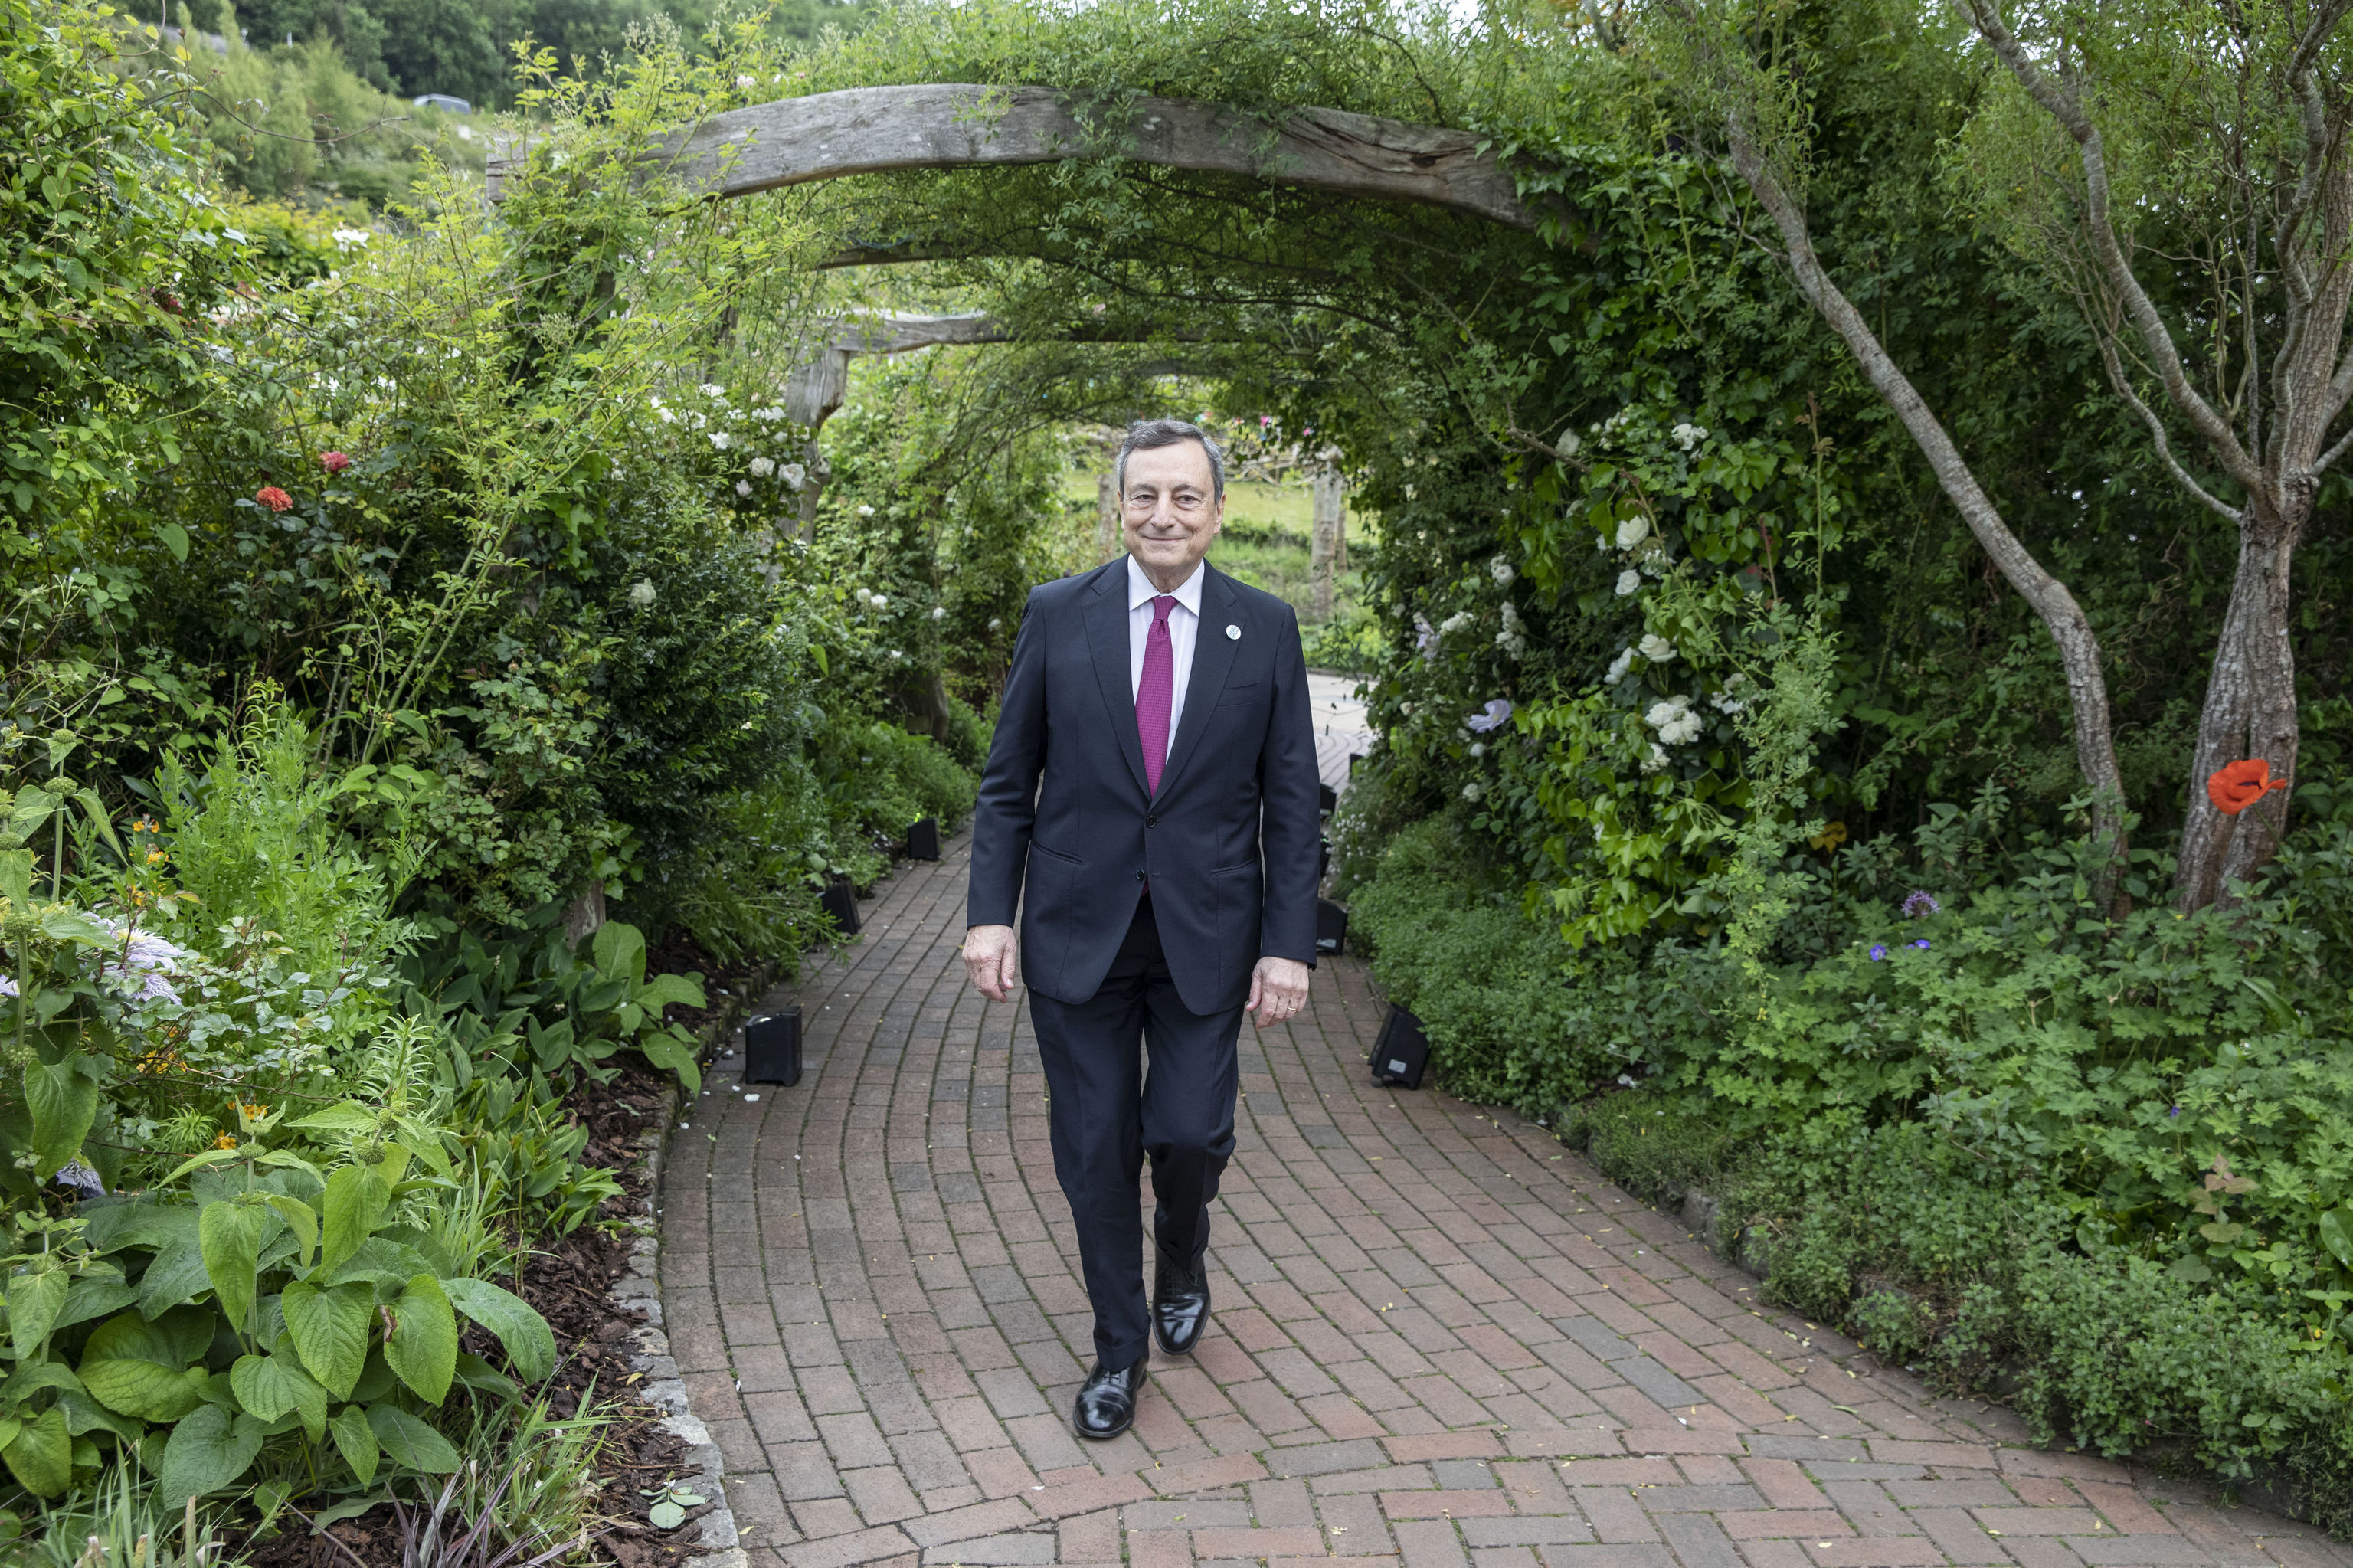 El primer ministro italiano, Mario Draghi.